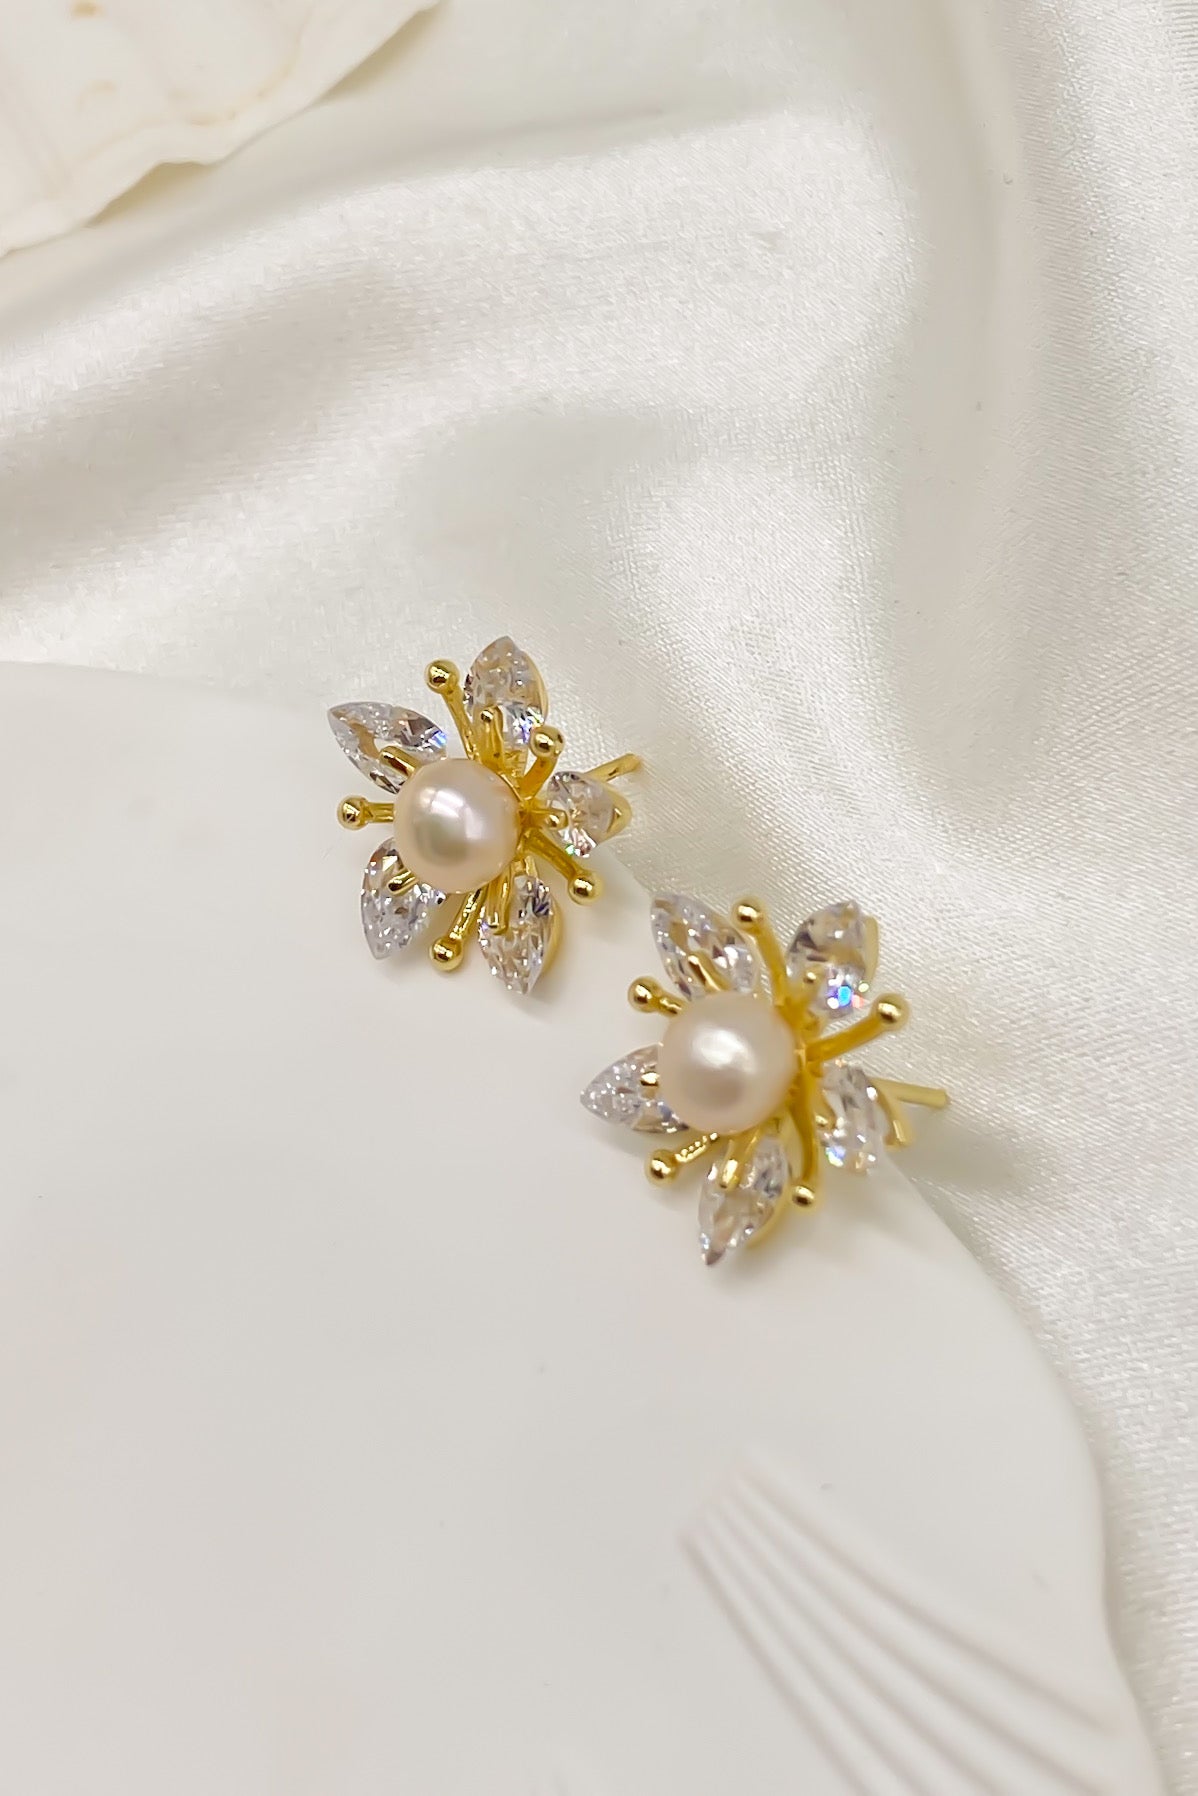 SKYE Shop Chic Modern Elegant Classy Women Jewelry French Parisian Minimalist Angelica Gold Pearl Sakura Flower Stud Earrings 3